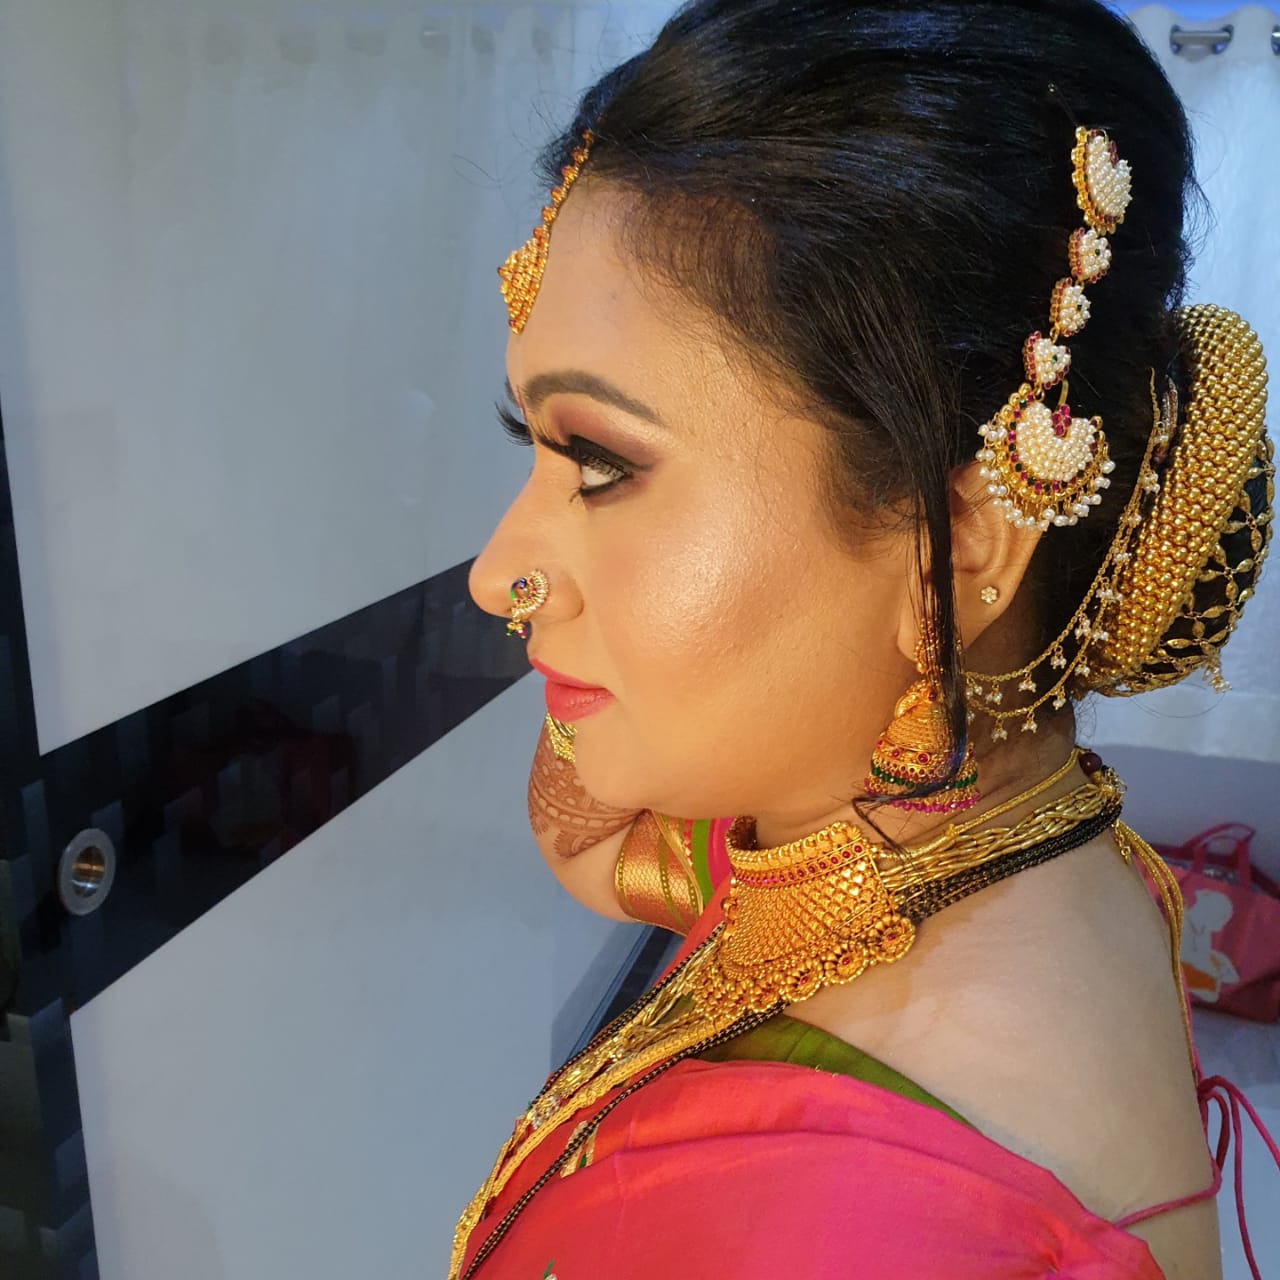 How To Wear Nauvari Saree | Nauvari Saree Makeup And Hairstyle for Girl |Nauvari  Saree Look for kids - YouTube